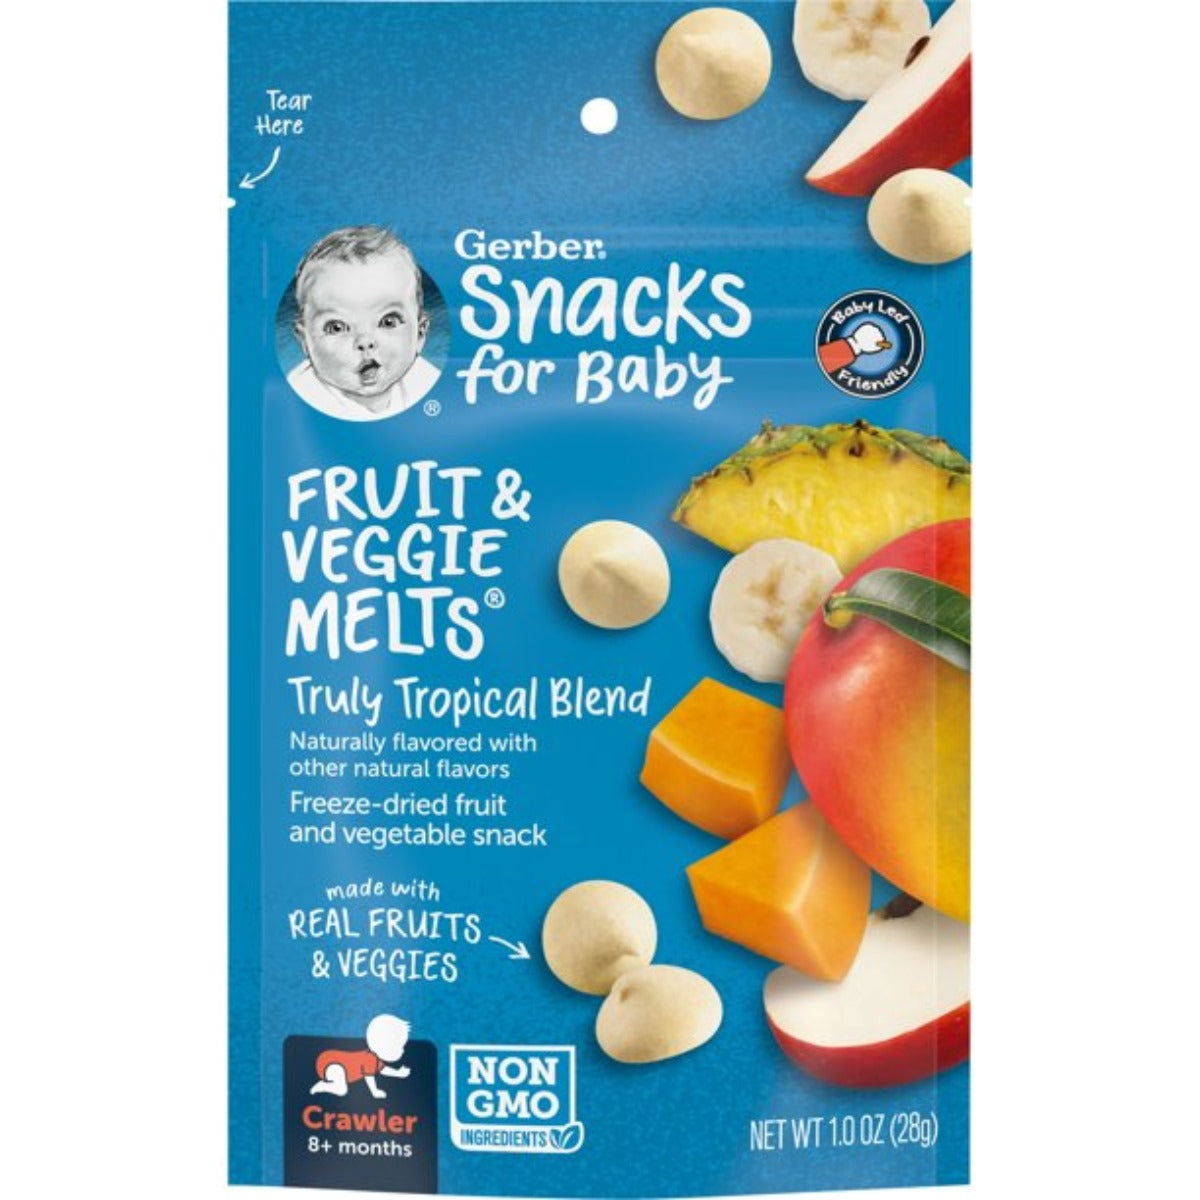 Gerber Snacks for Baby, Fruit & Veggie Melts - Truly Tropical Blend